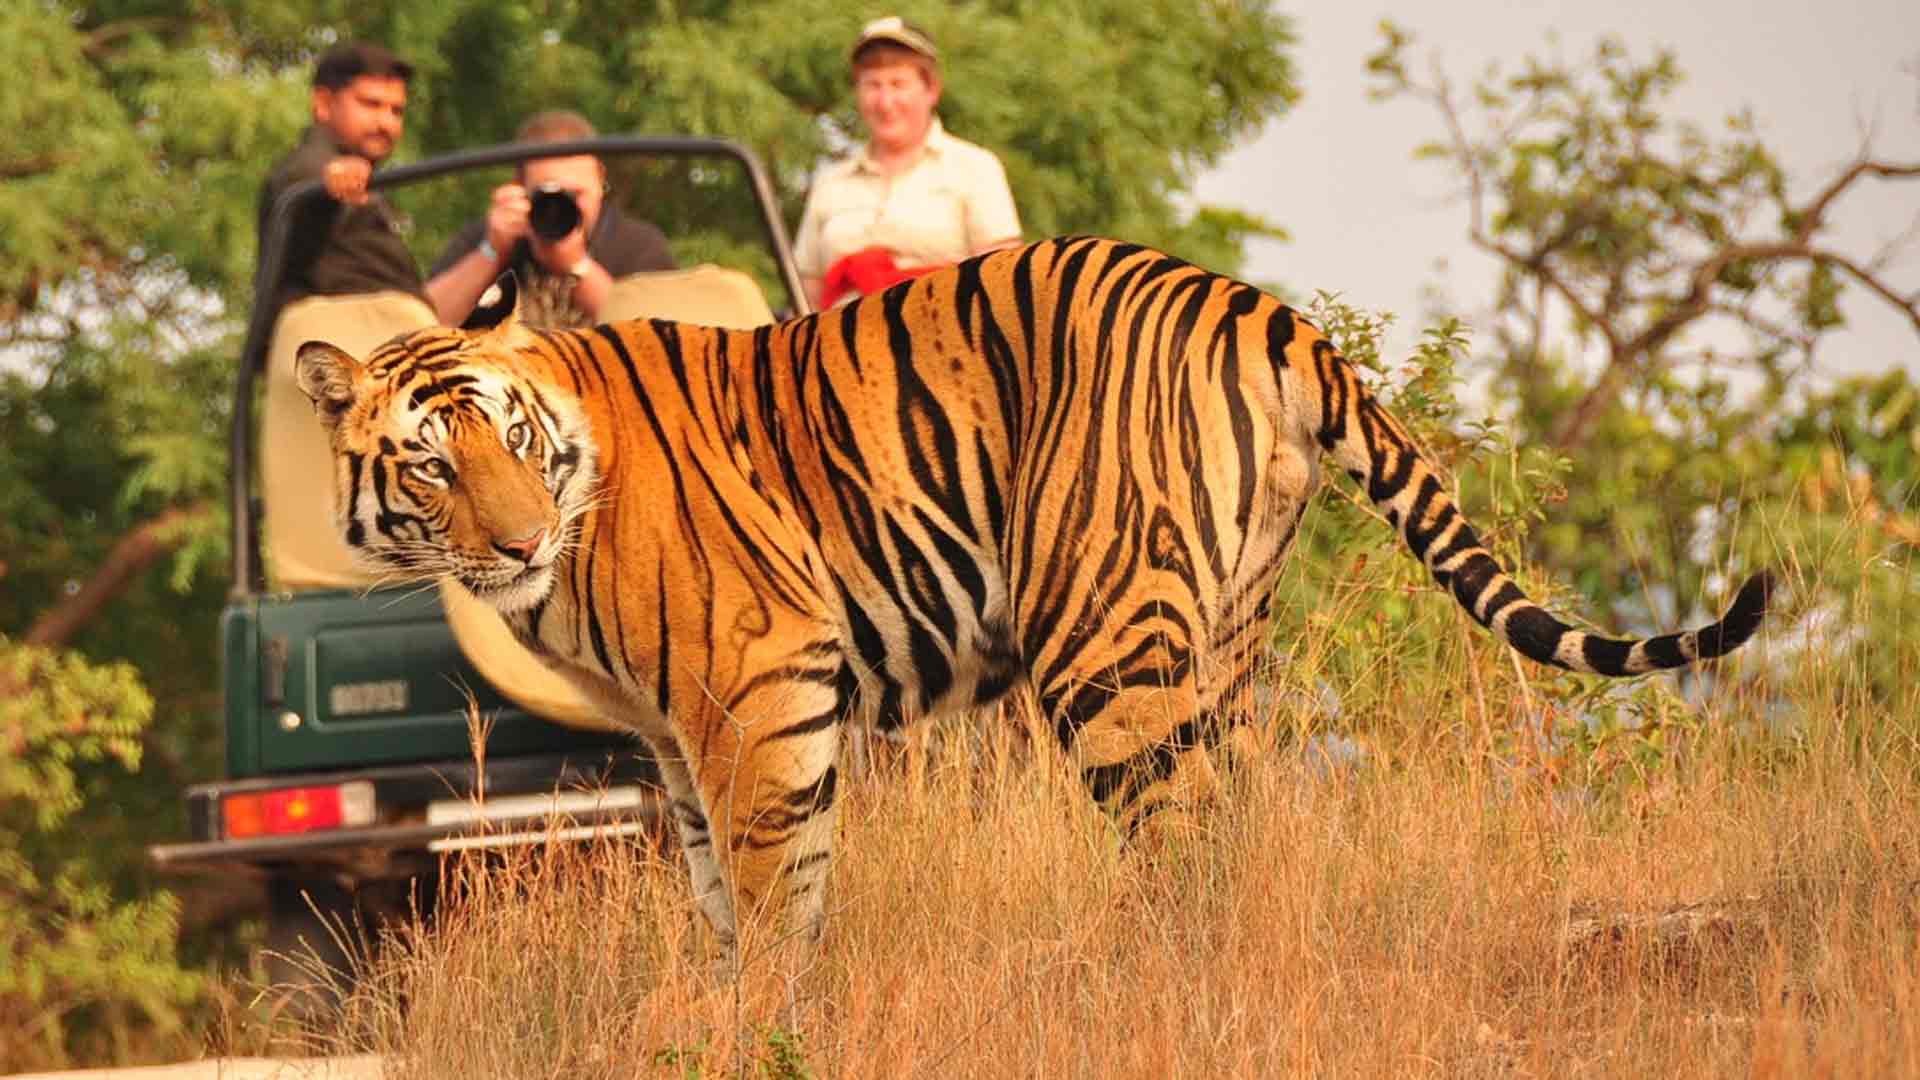 Tiger Safari India Iml Travel 1920x1080 Iml Travel Services